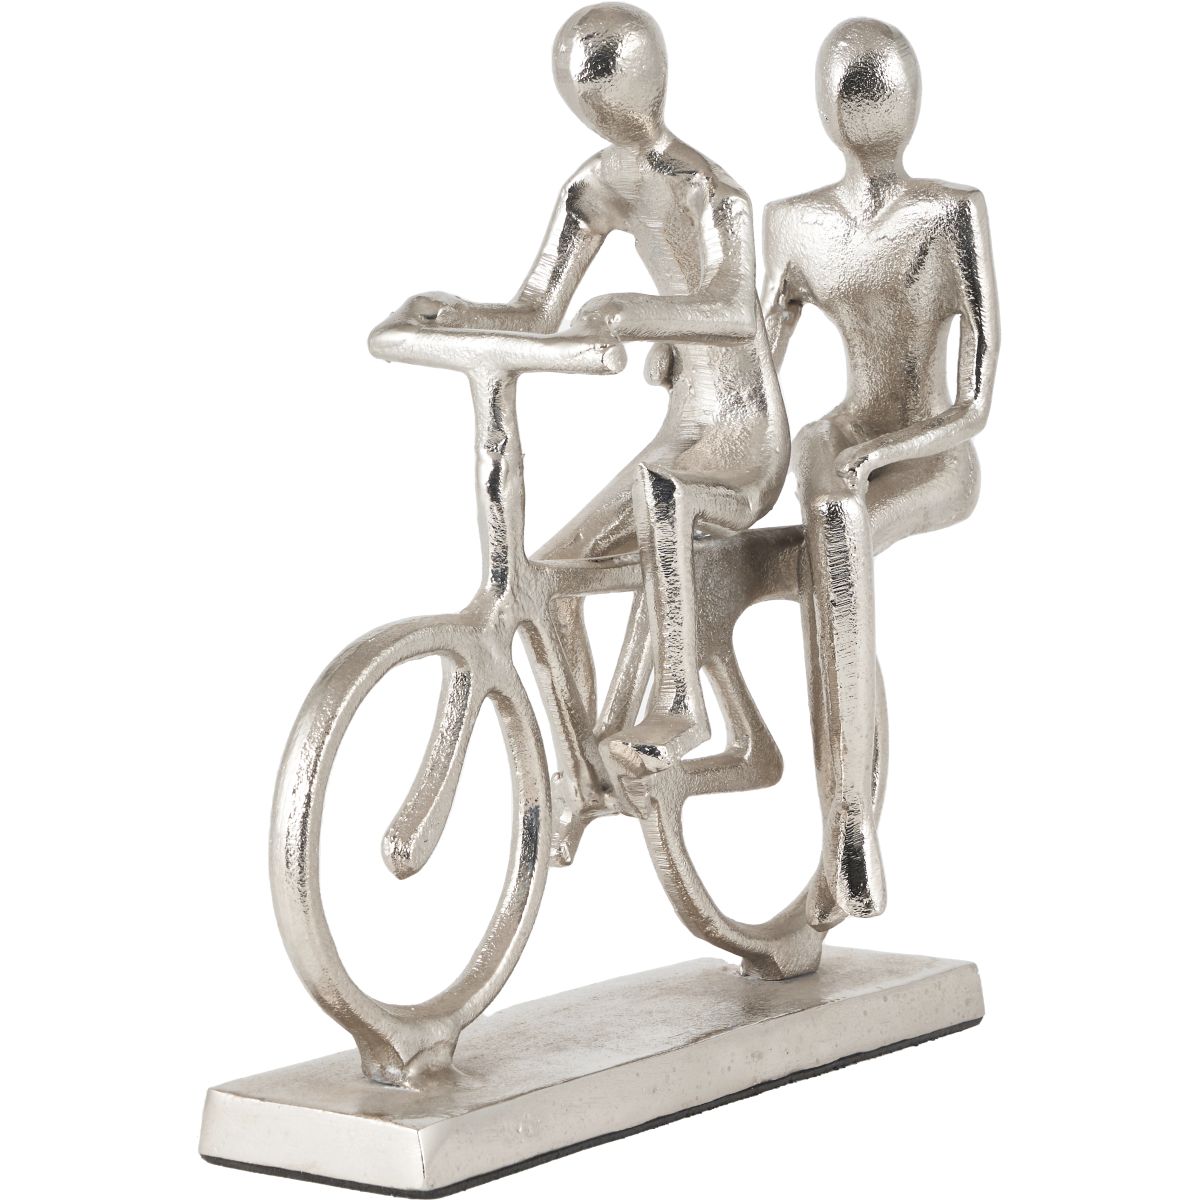 Shiny Silver Double Cyclist Ornament